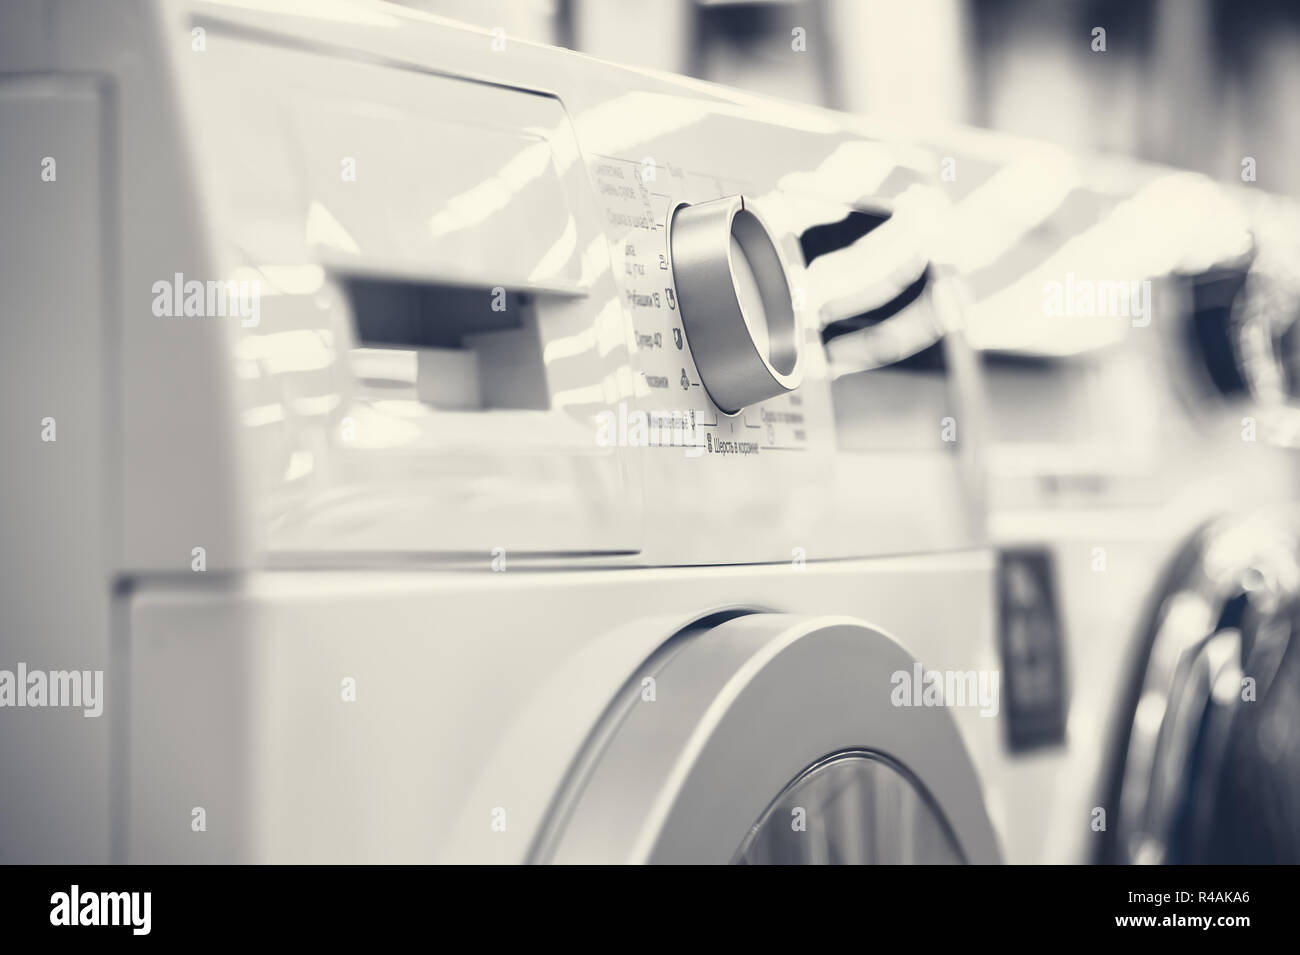 washing mashines closeup in appliance store Stock Photo